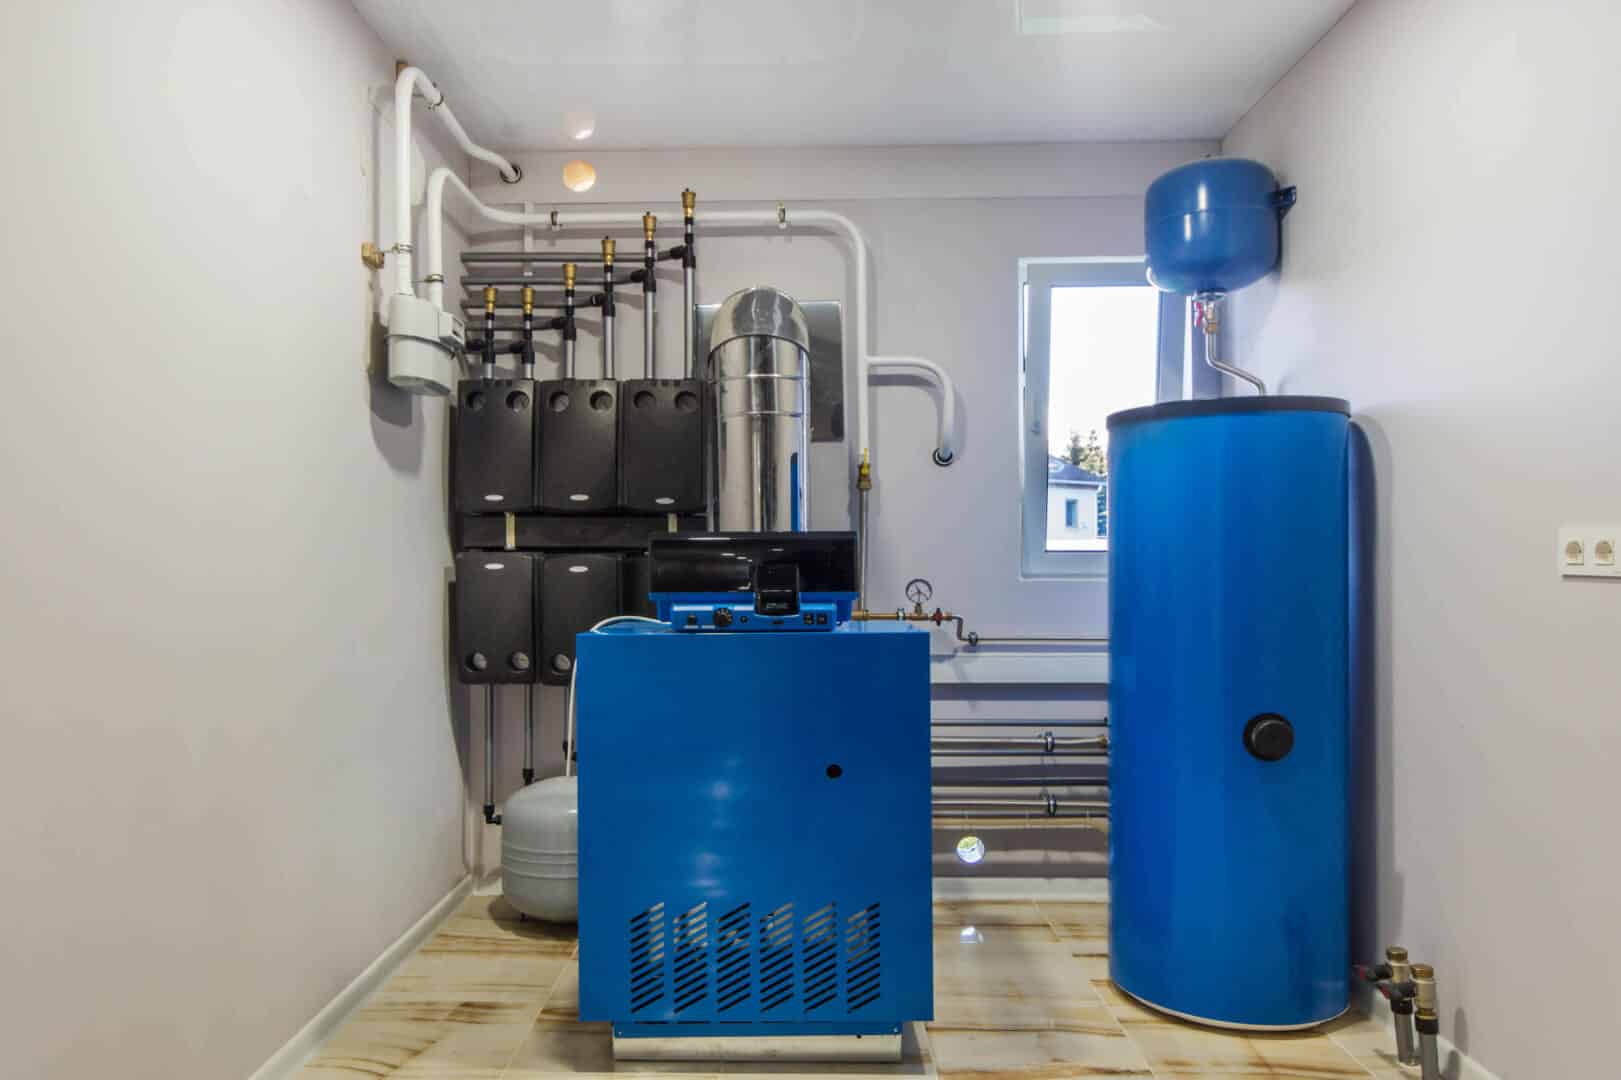 blue furnace in boiler room